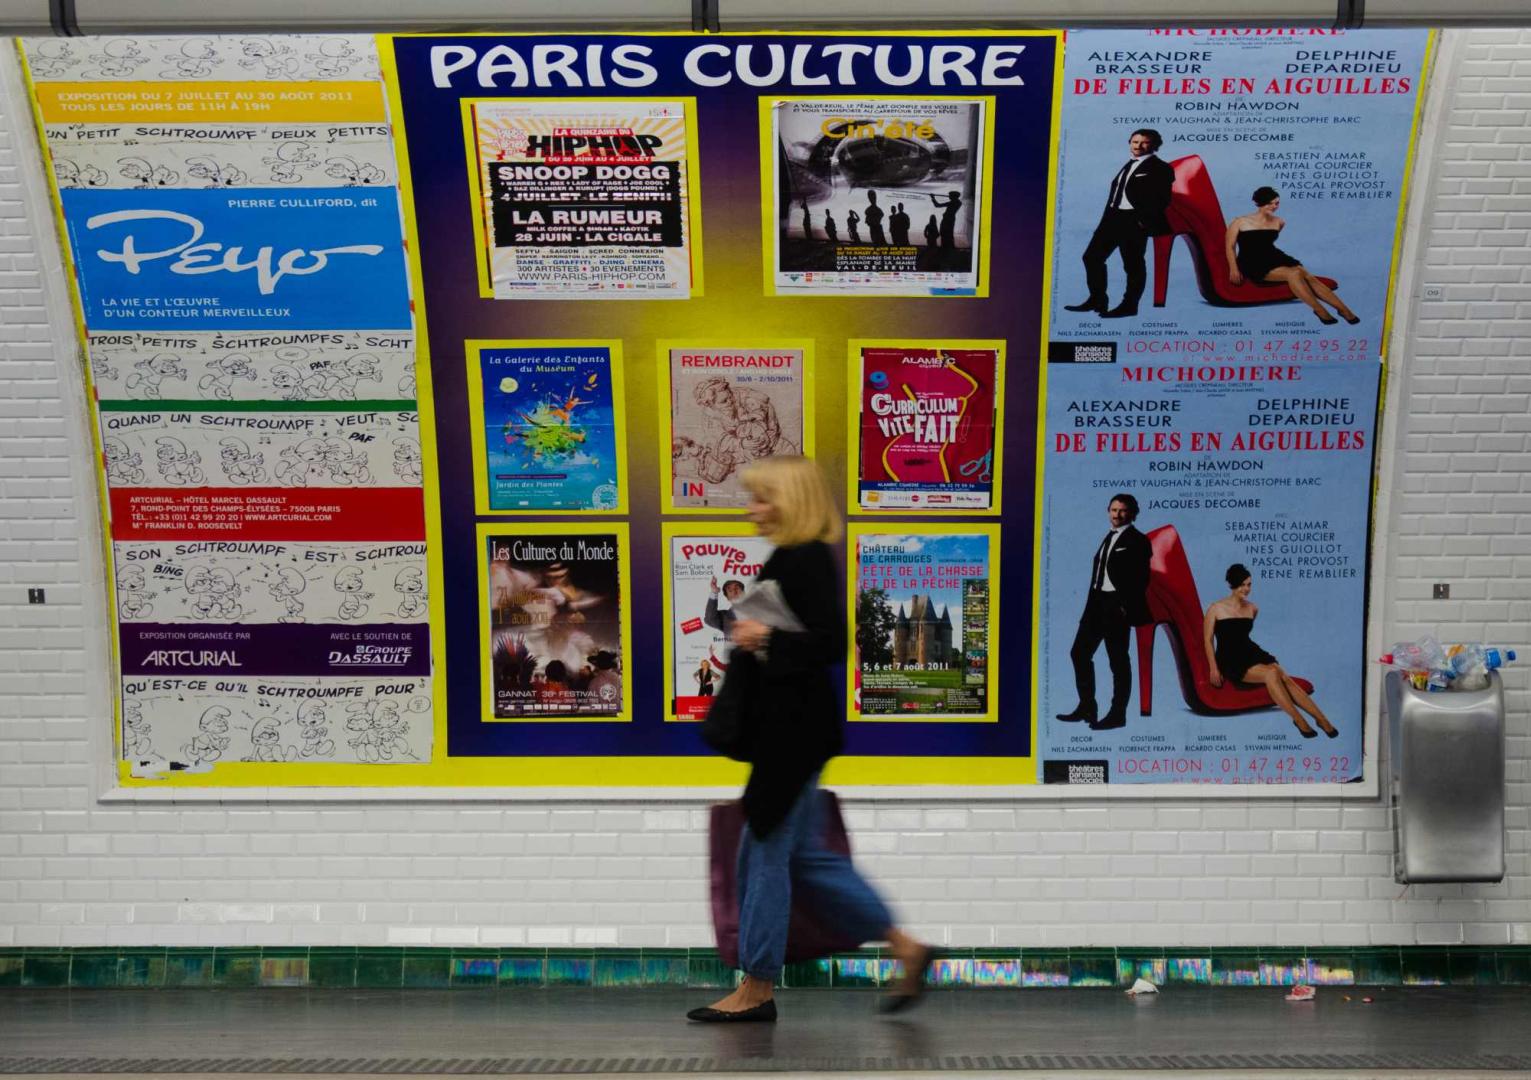 Paris culture